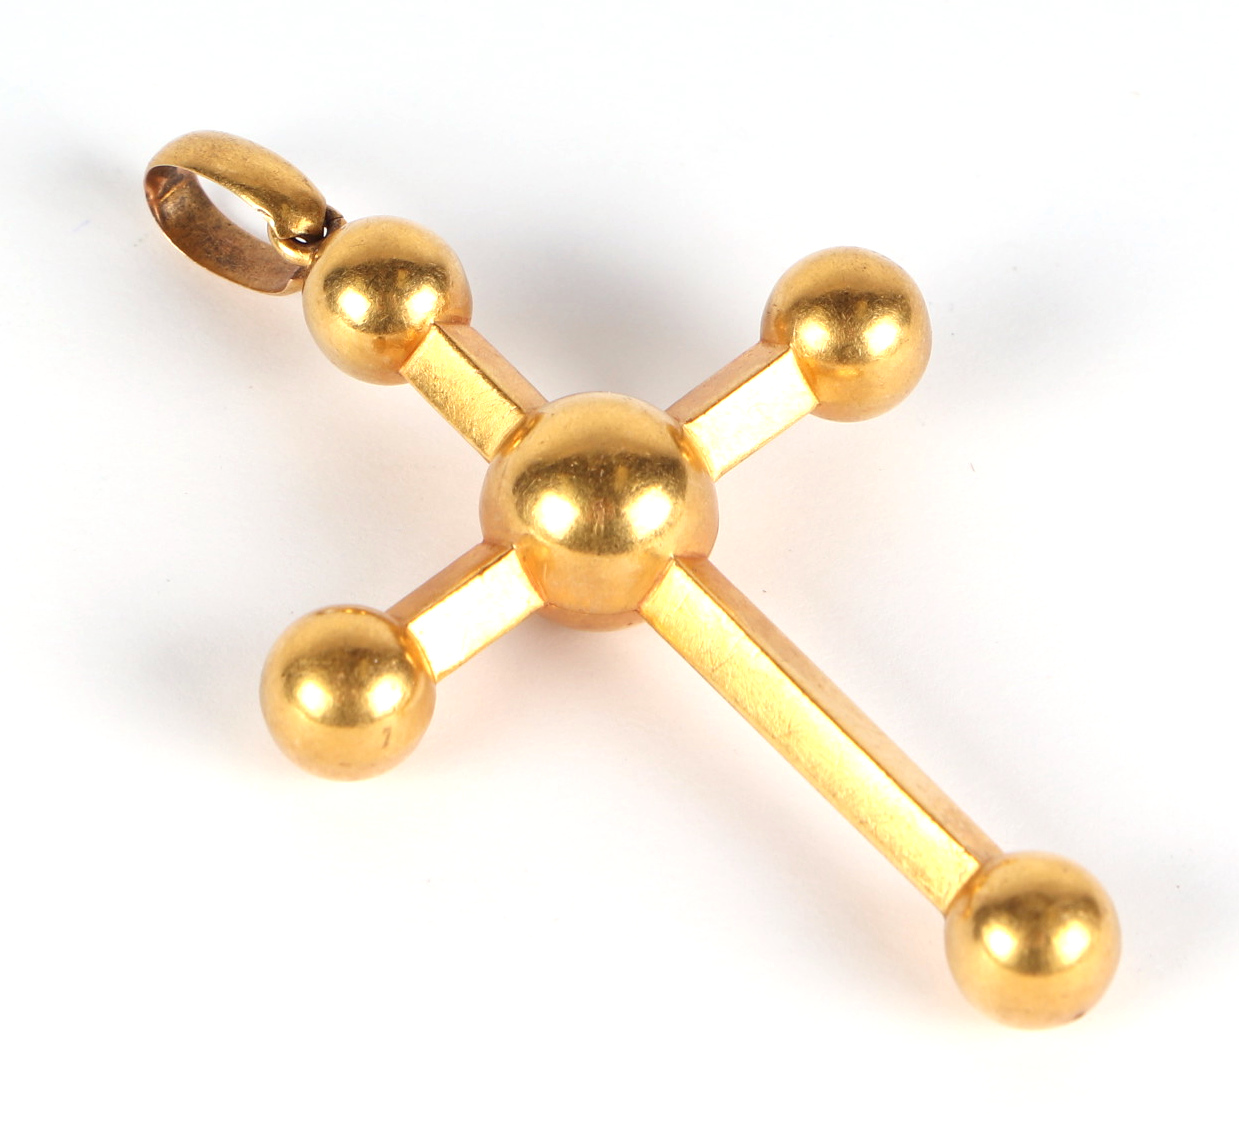 A yellow metal cross pendant, 5cm high, 3.8g. - Image 2 of 2